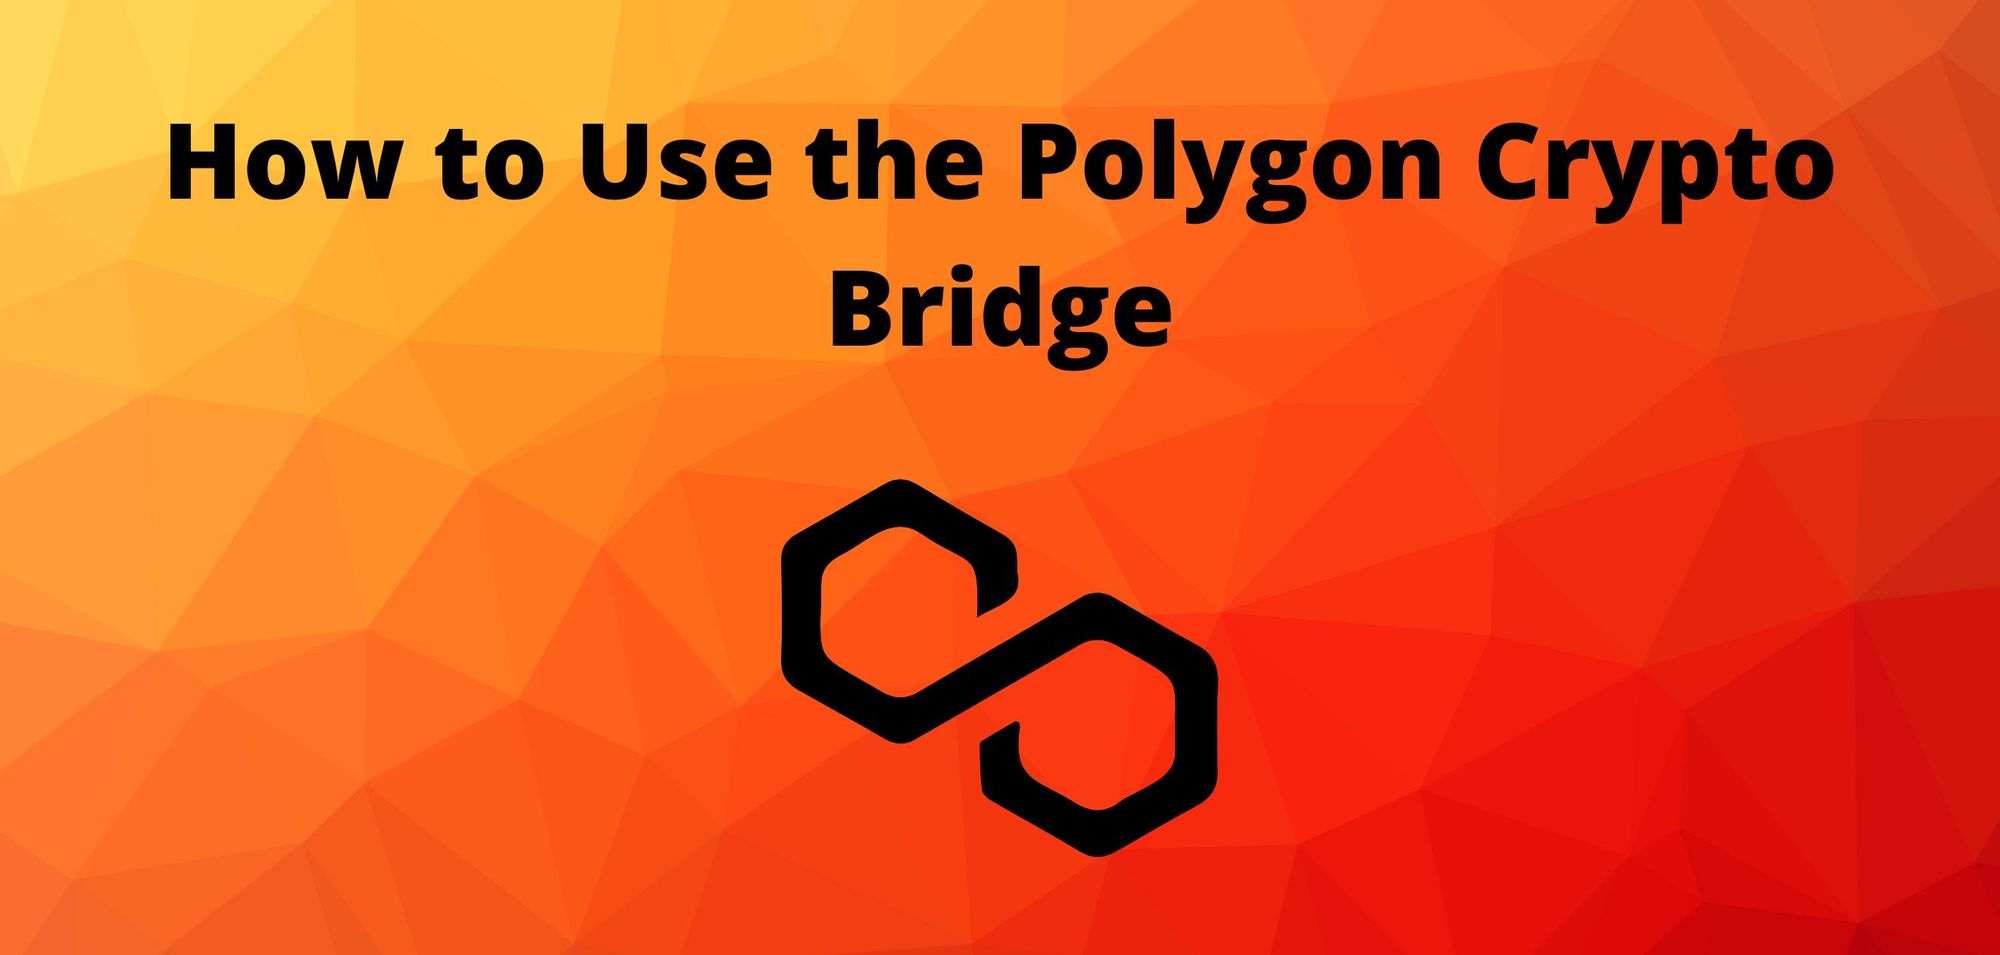 Orange background, Polygon logo and the words "How to Use the Polygon Crypto Bridge"